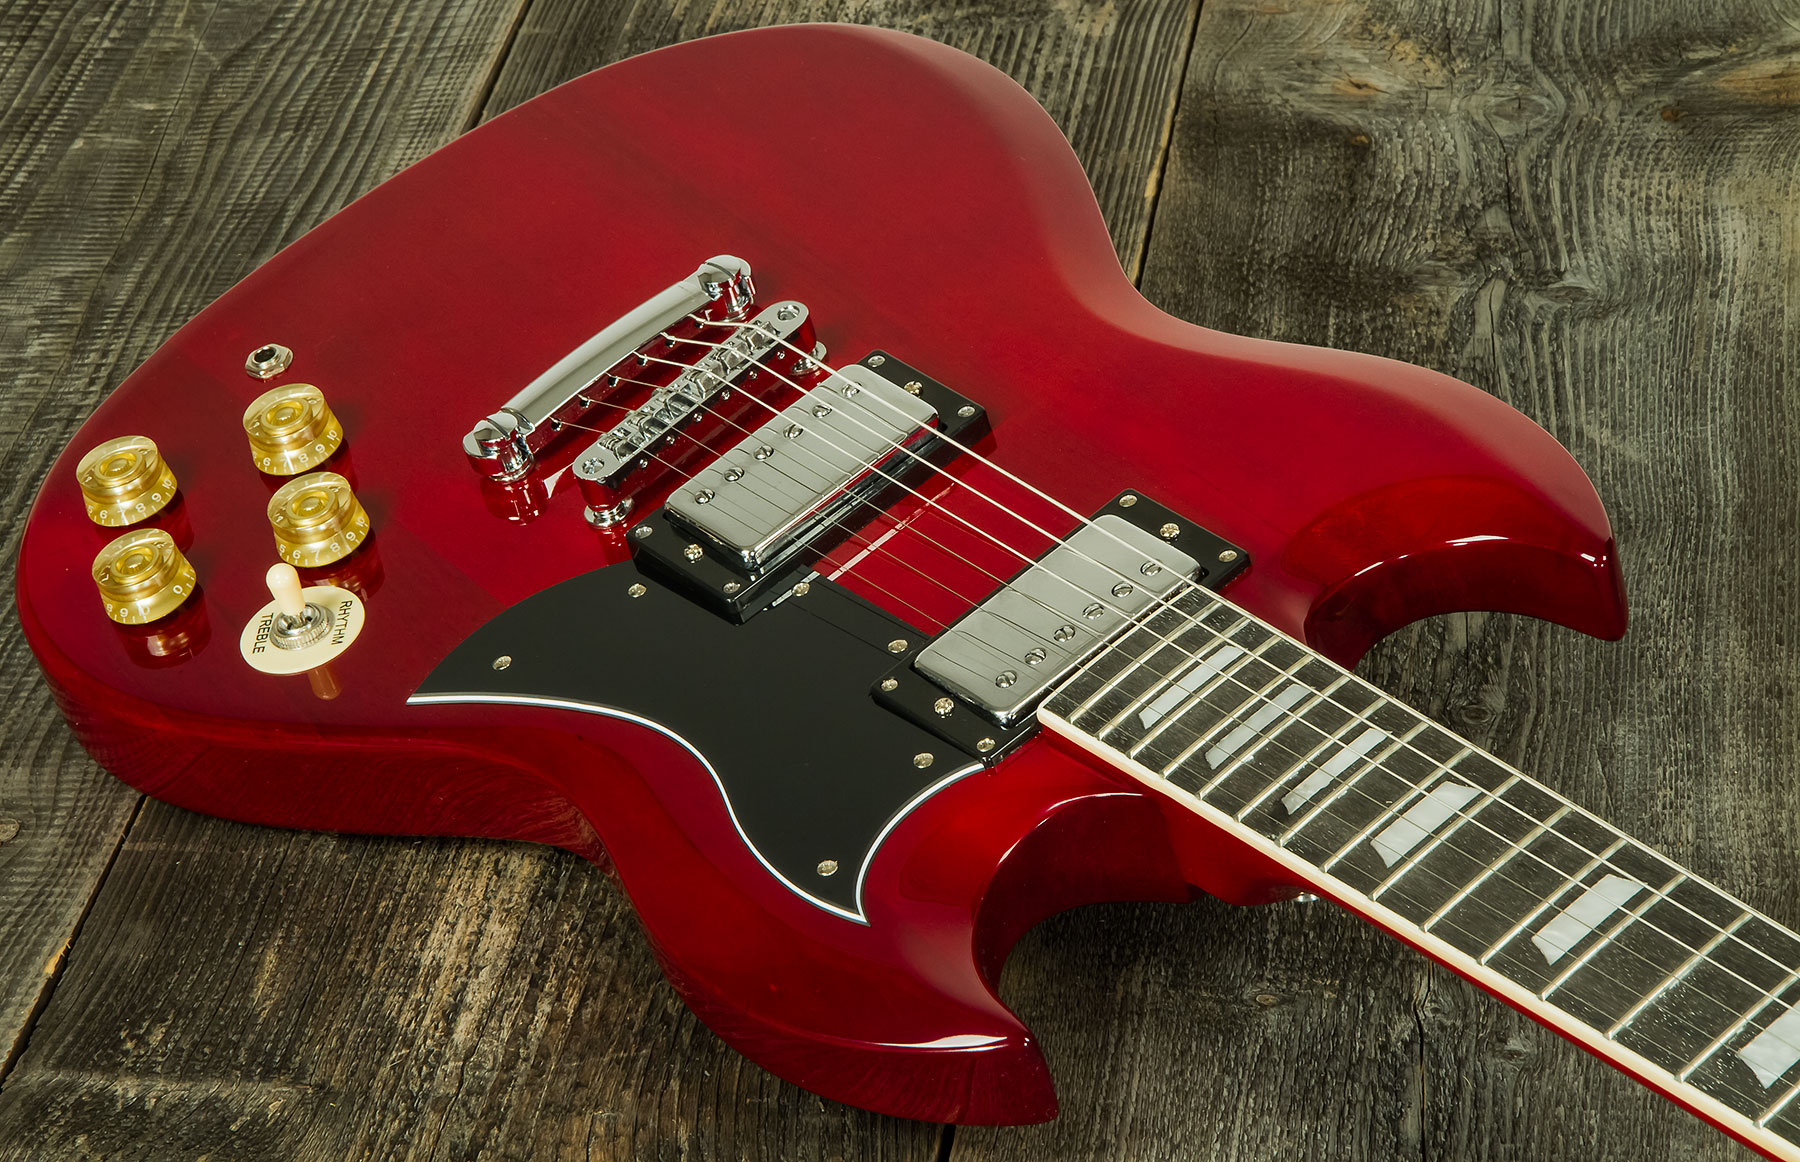 Eastone Sdc70 +marshall Mg10g Gold +cable +housse +courroie +mediators - Red - Elektrische gitaar set - Variation 2